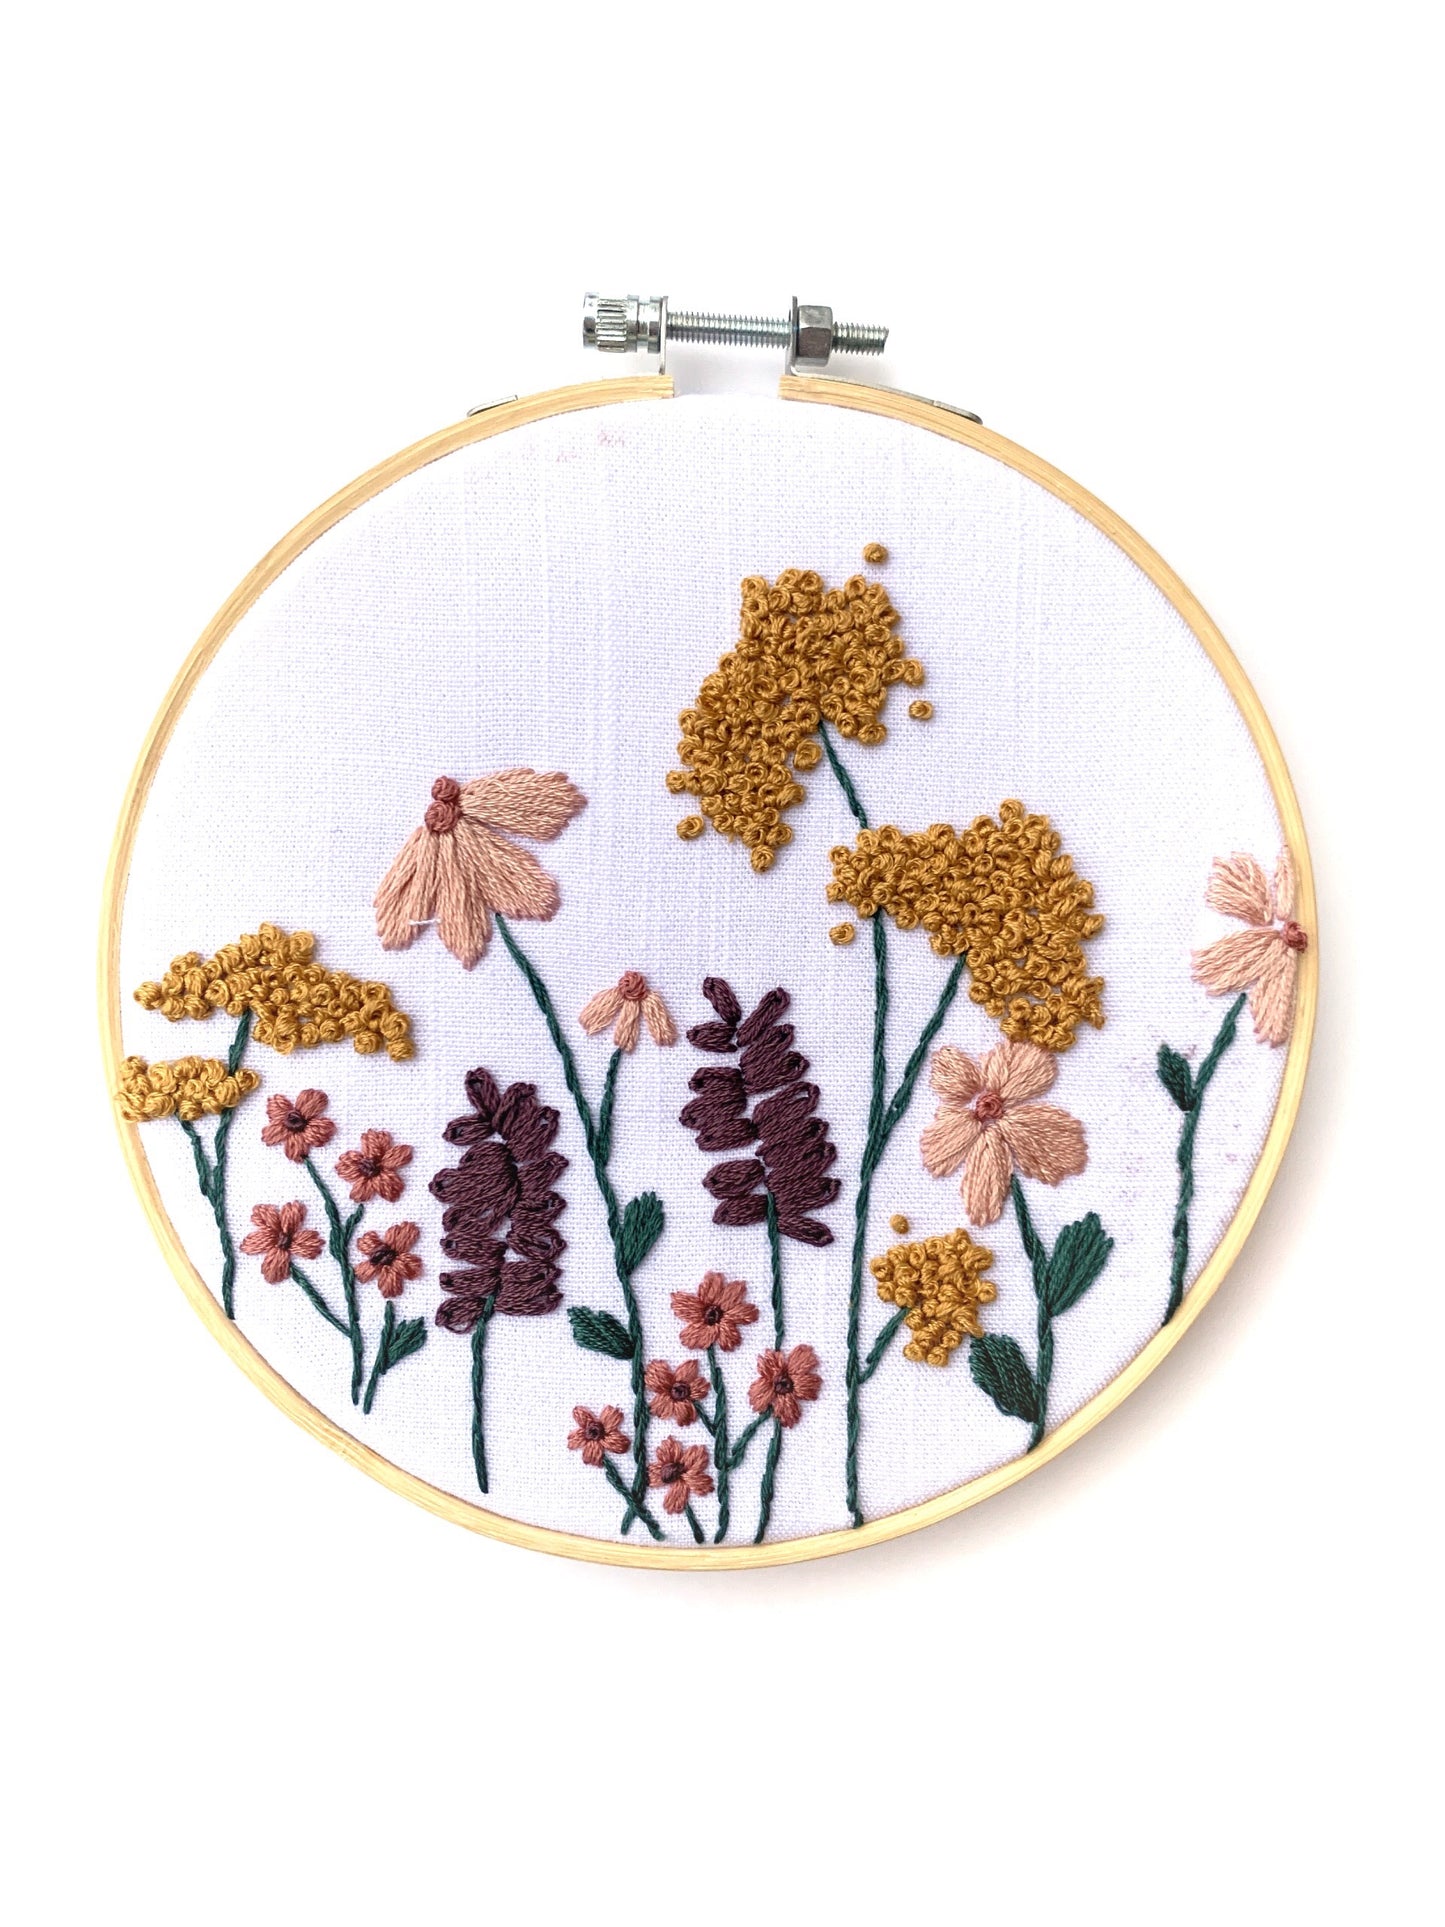 Grandma's Garden Embroidery Kit